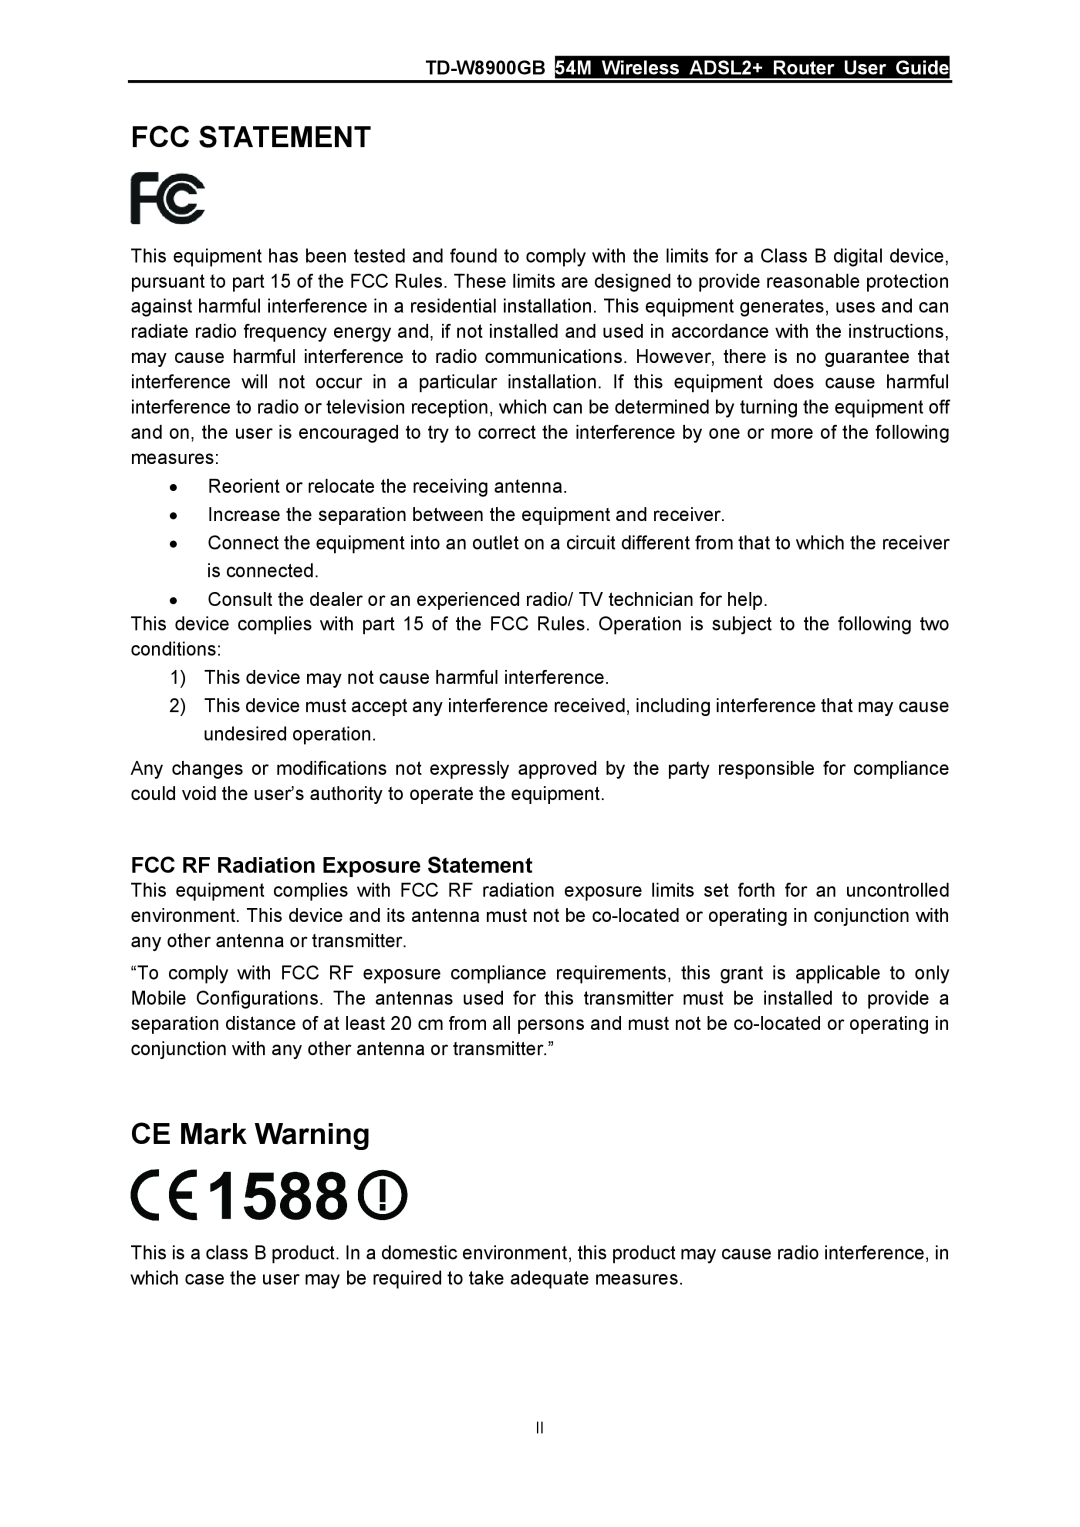 TP-Link TD-W8900GB manual Fcc Statement, CE Mark Warning, FCC RF Radiation Exposure Statement 